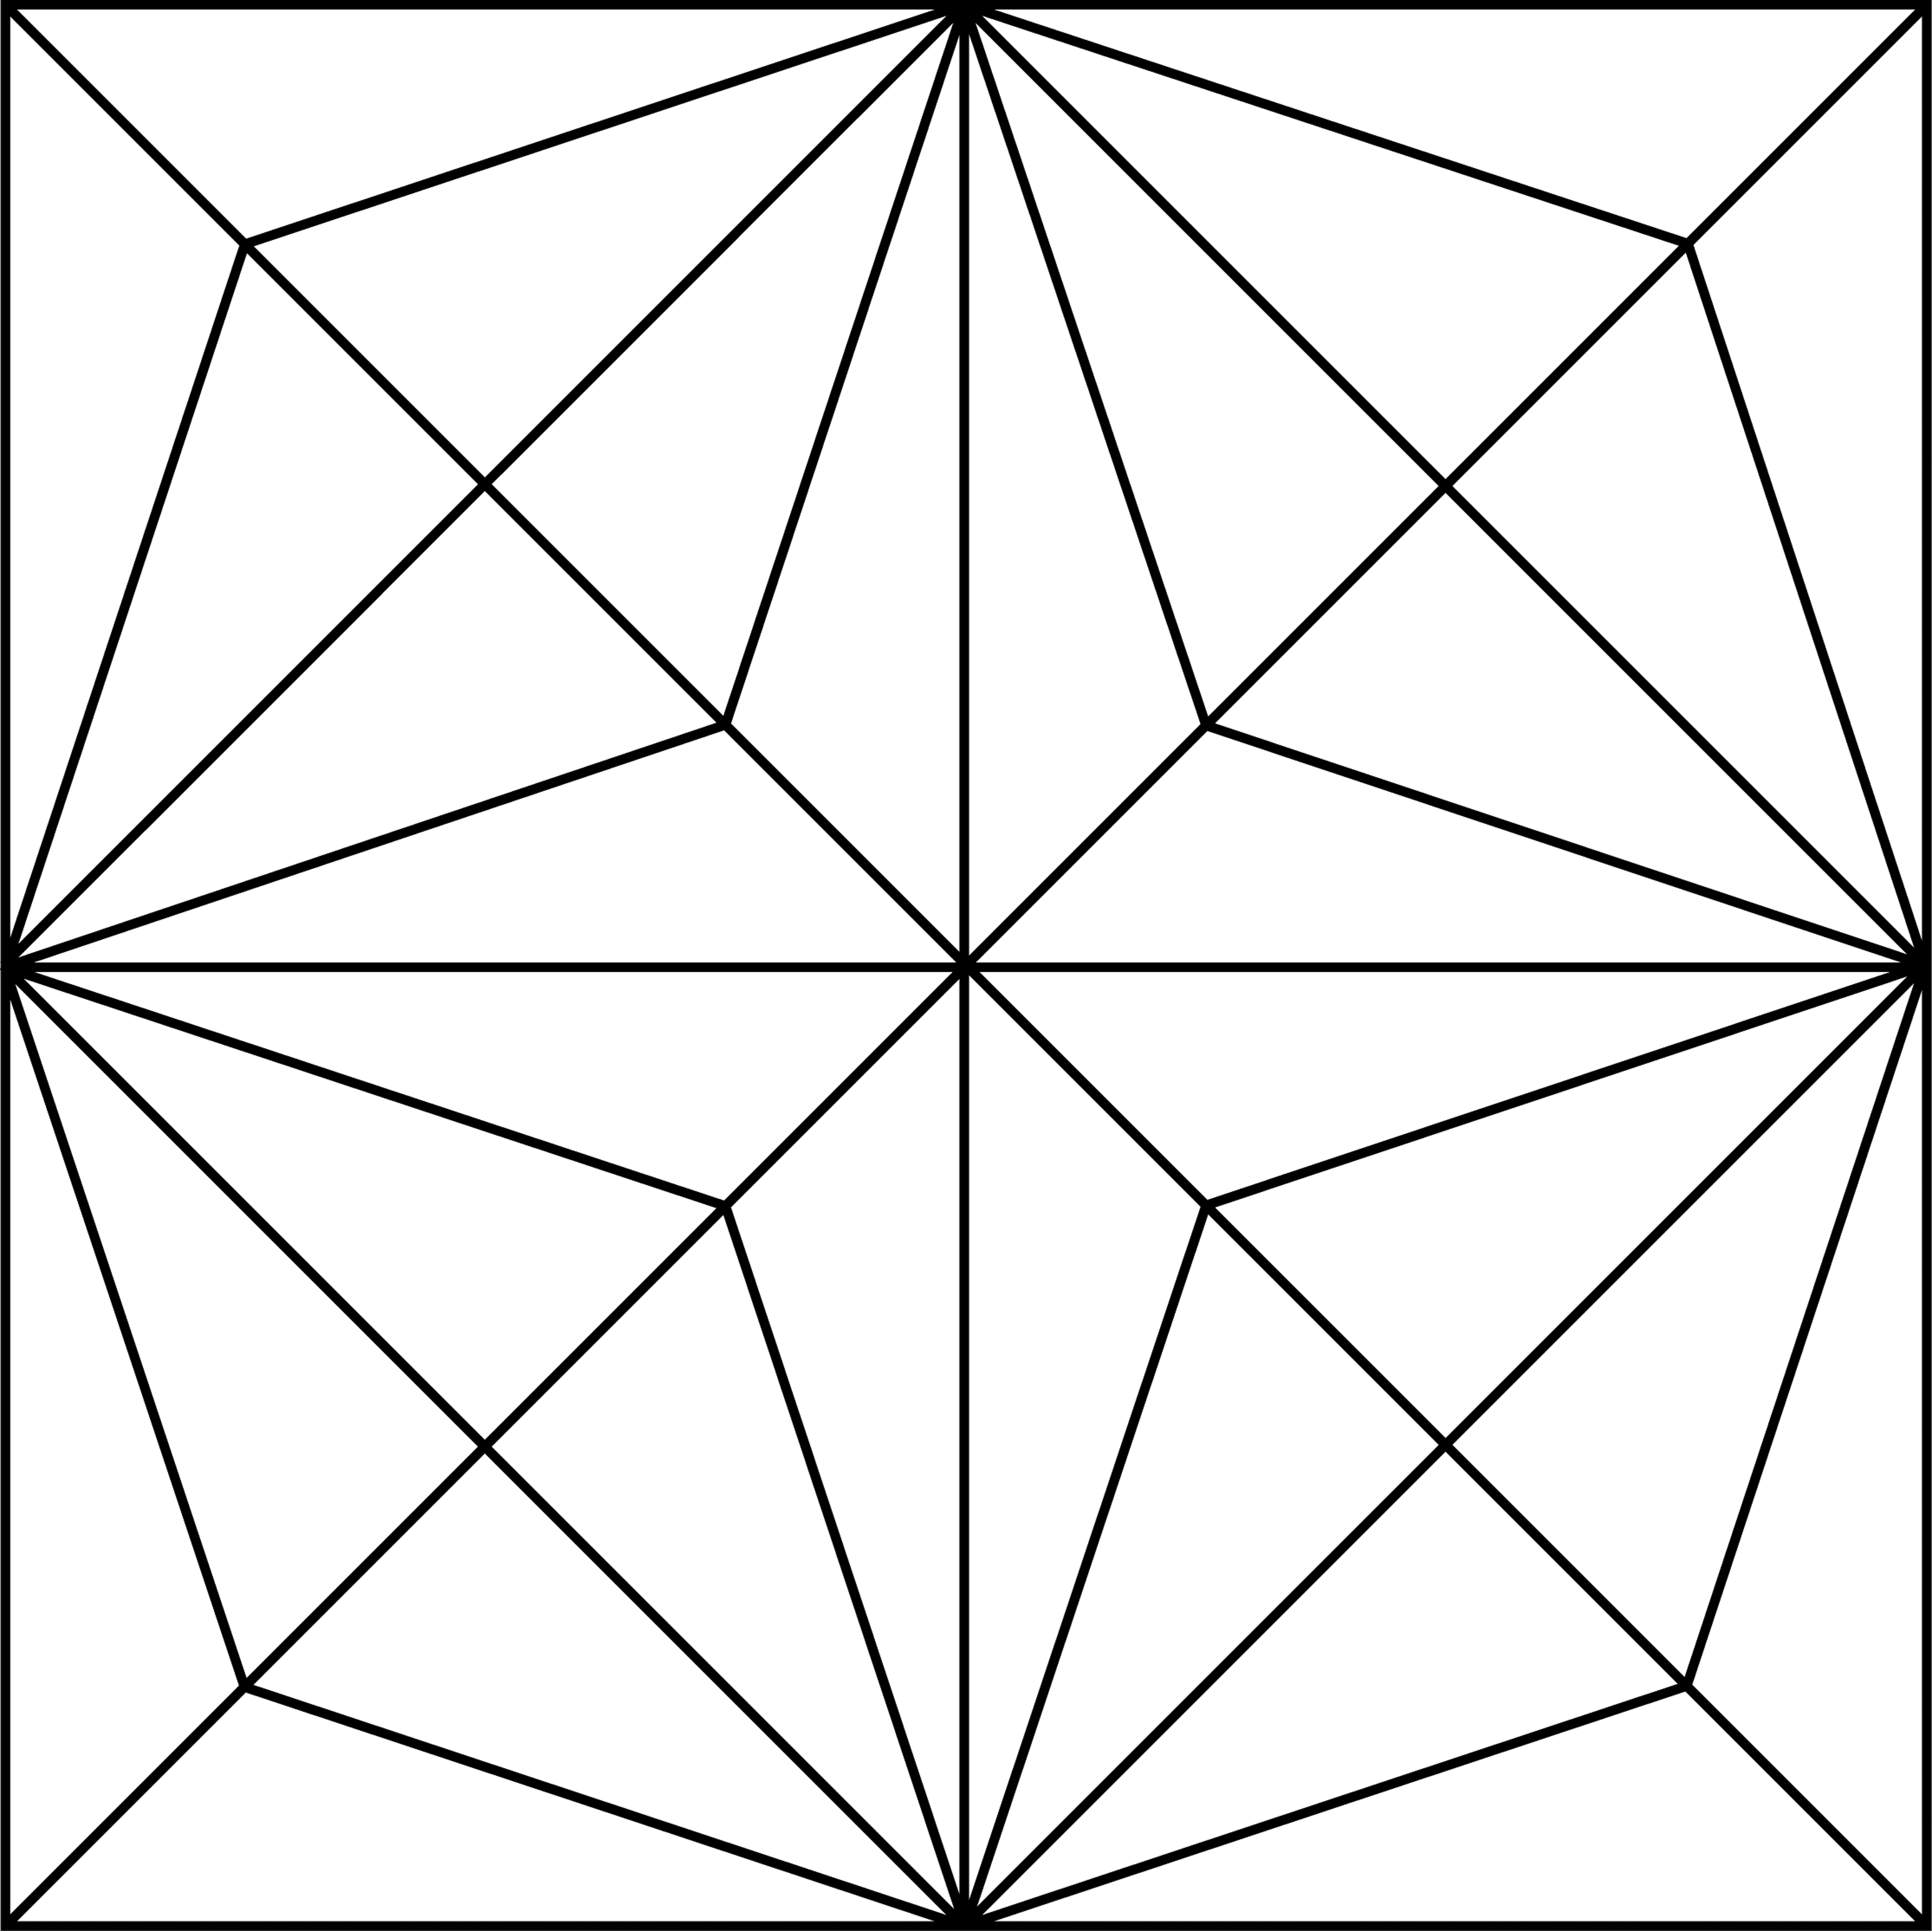 Нарисуй квадрат по звездам. Геометрический узор в квадрате. Симметричный узор. Симметричный орнамент в квадрате. Узор в квадрате для рисования.